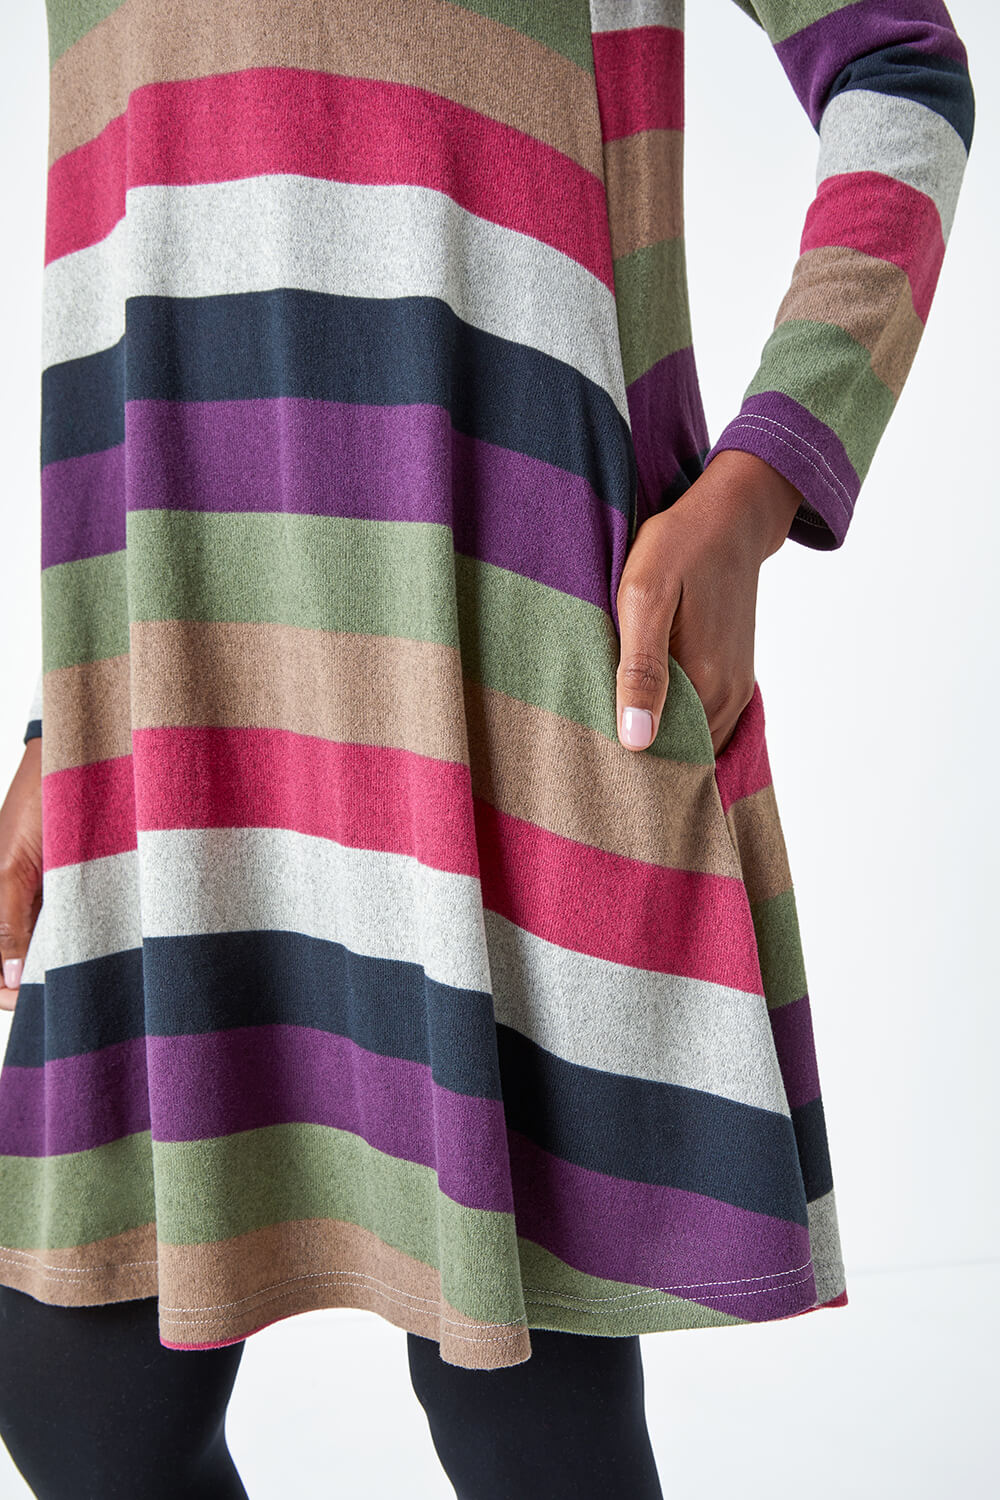 PINK Stripe Print Swing Stretch Dress, Image 5 of 5